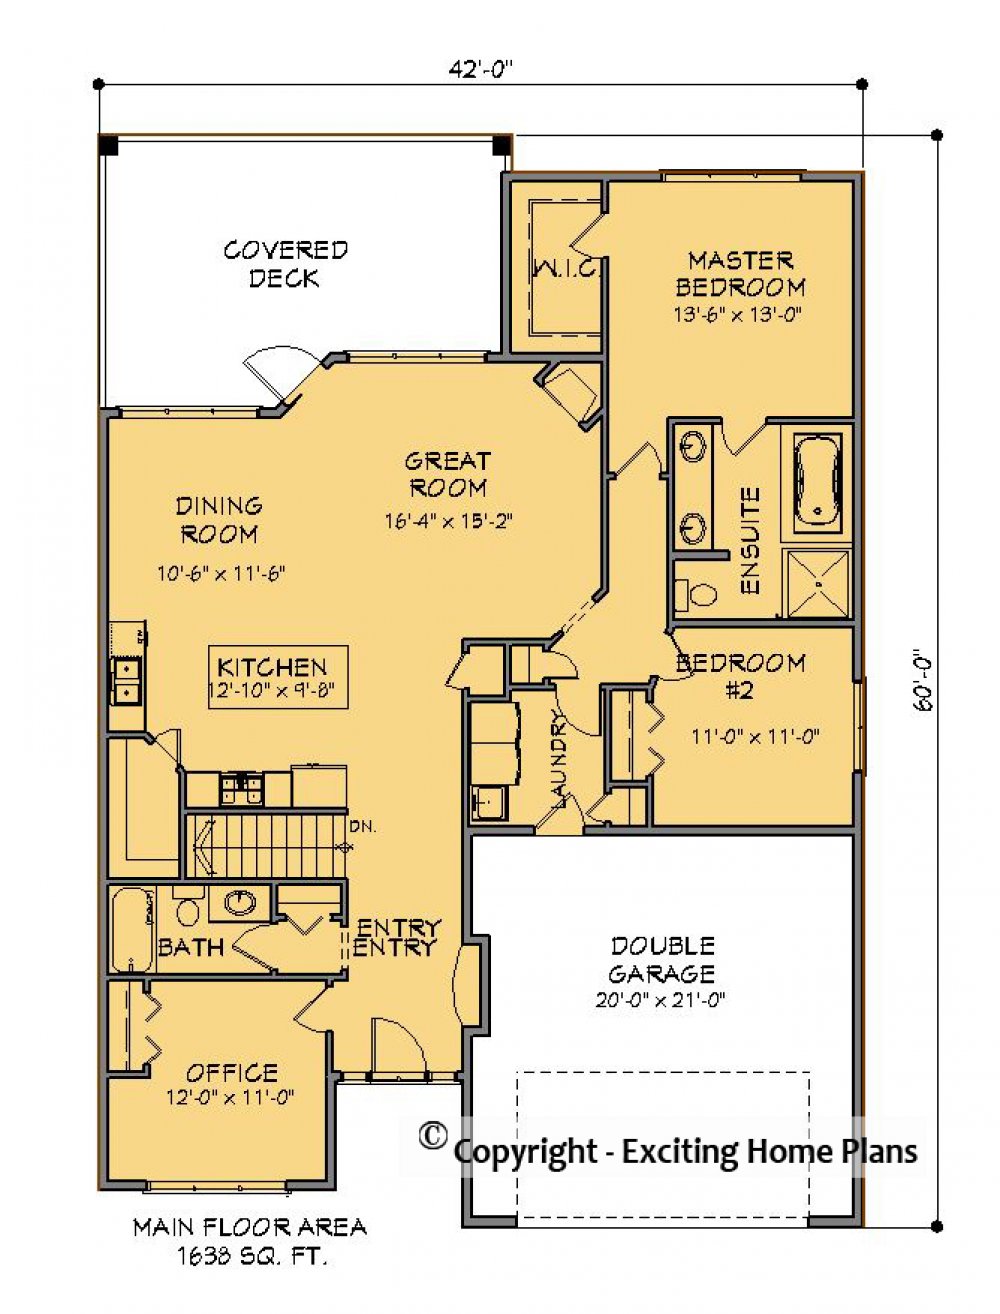 House Plan E1581-10  Main Floor Plan